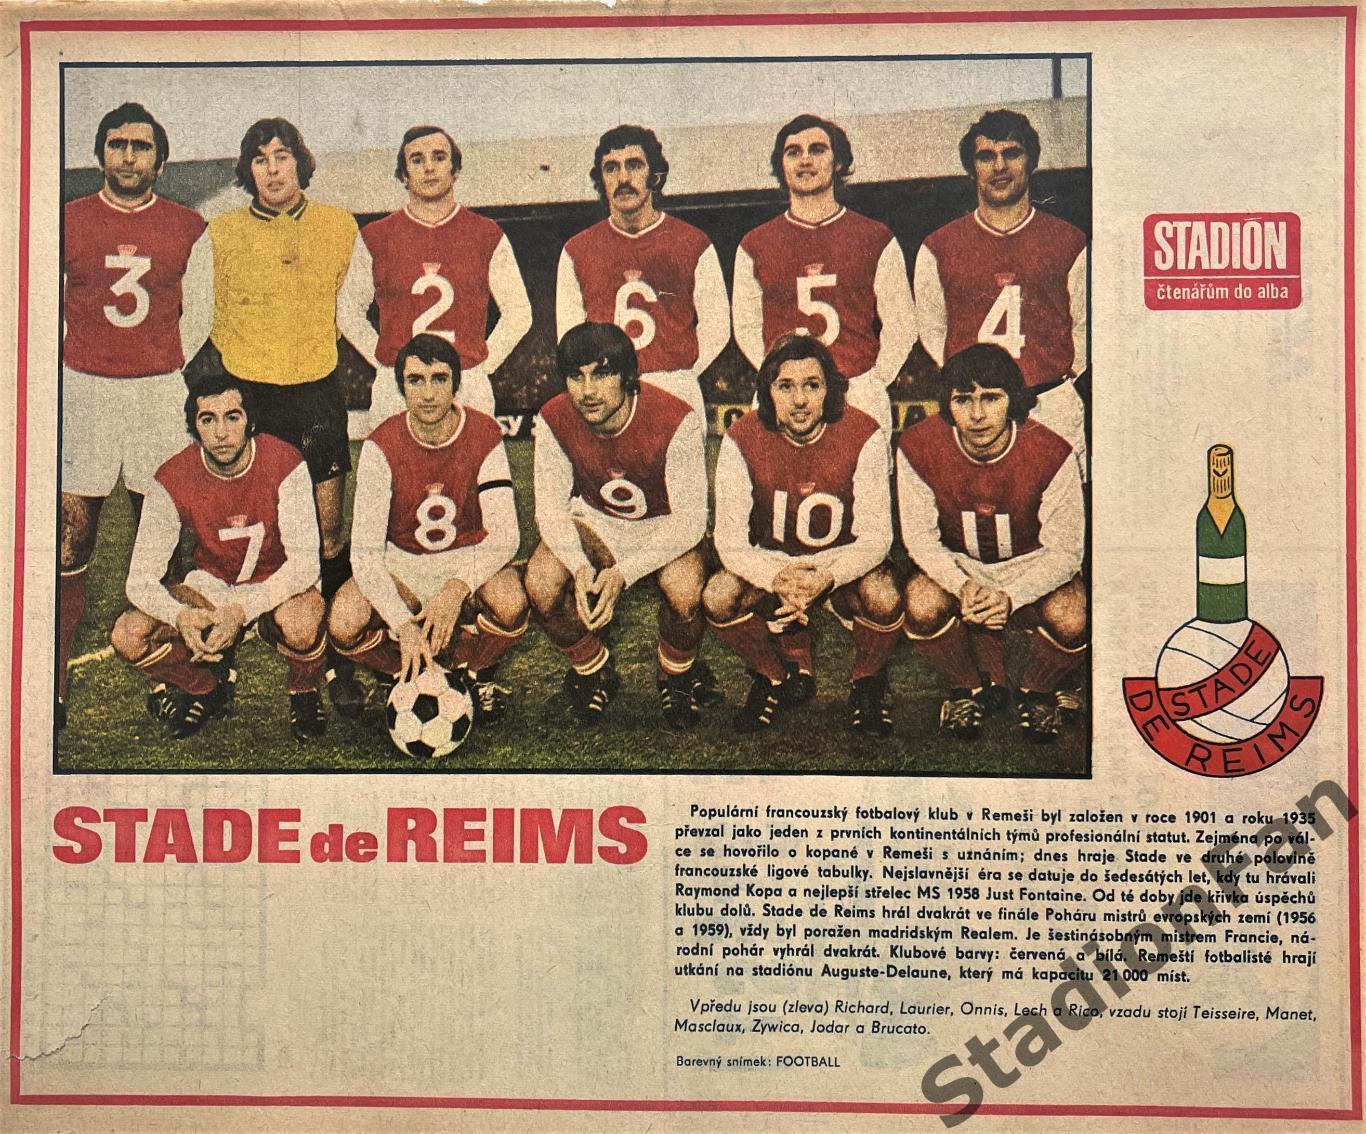 Постер из журнала Стадион (Stadion) - Stade de Reims, 1972.